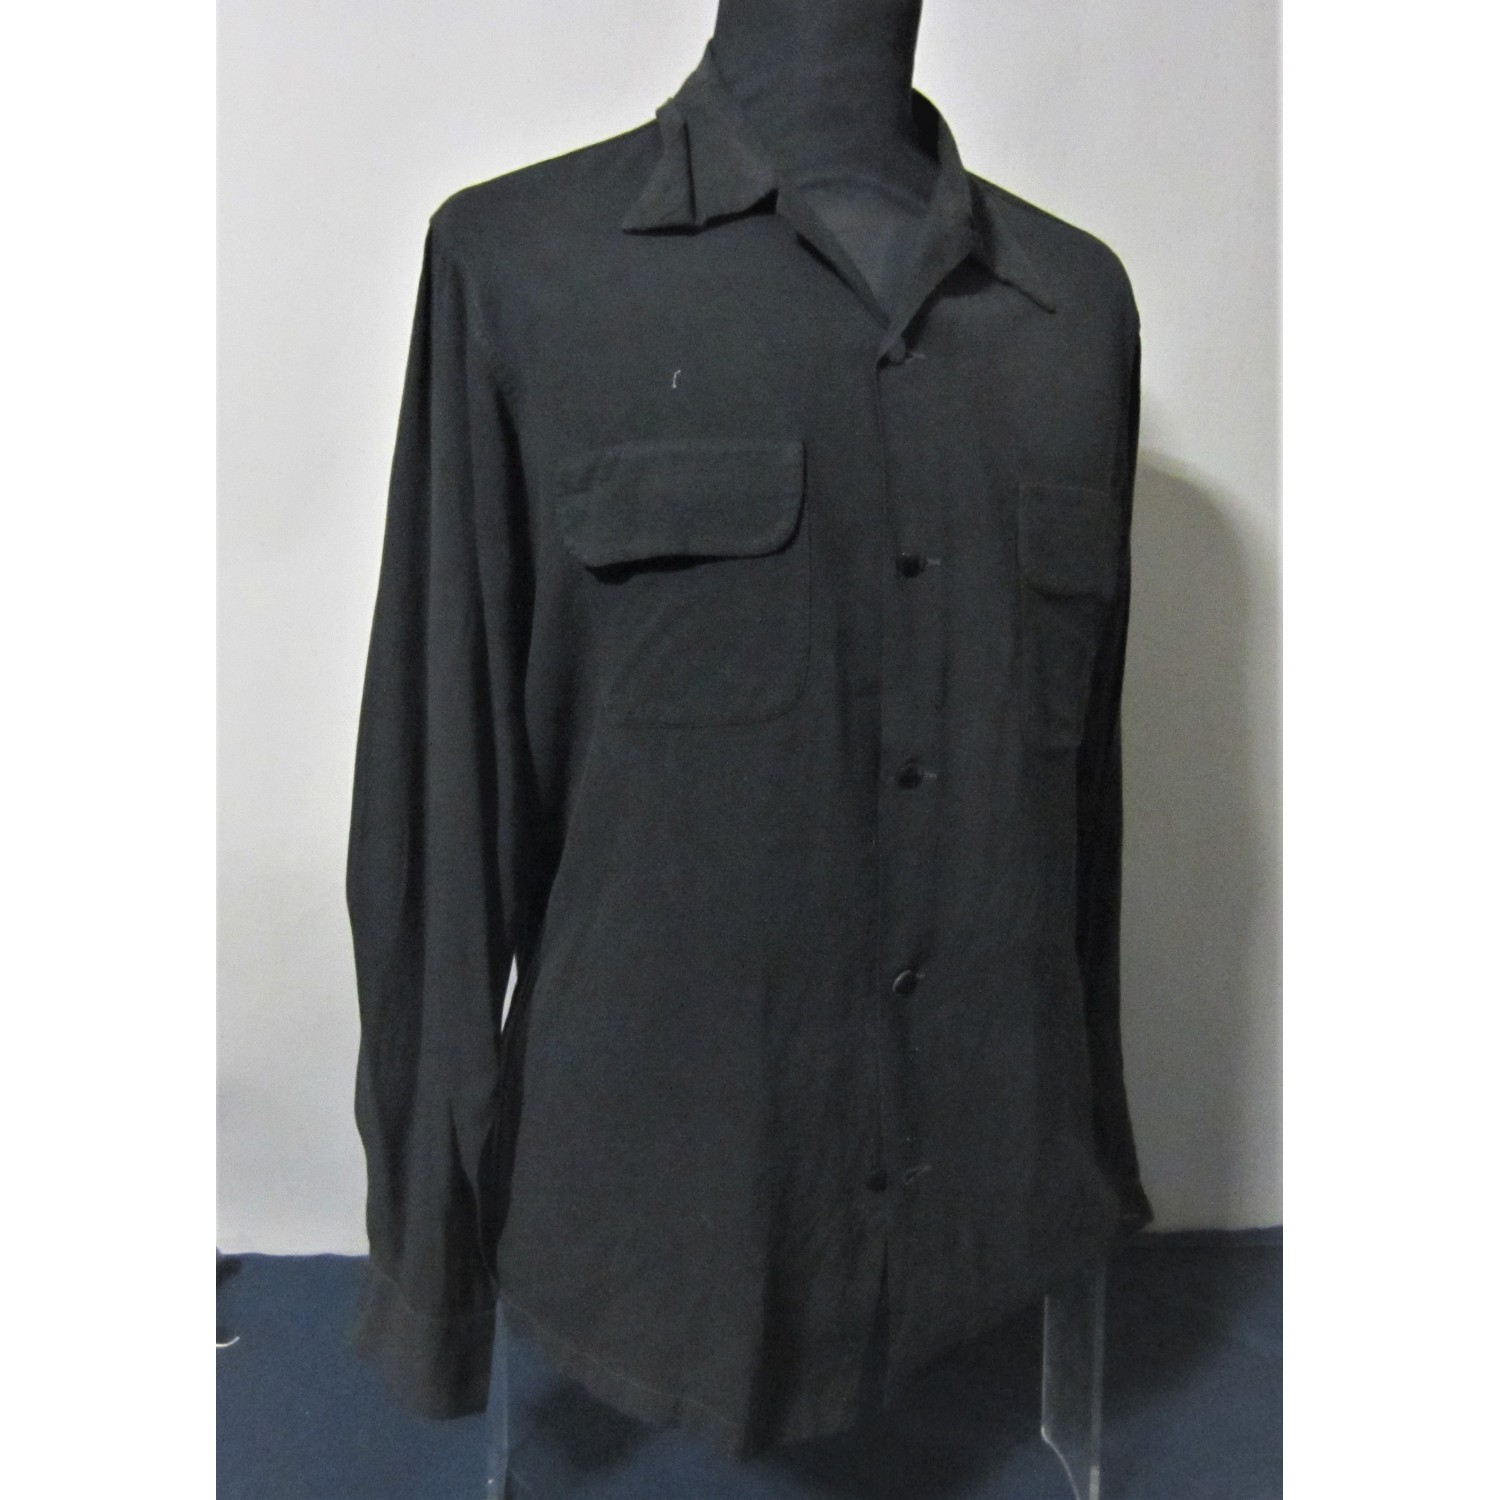 Black under-jacket shirt in rayon fabric